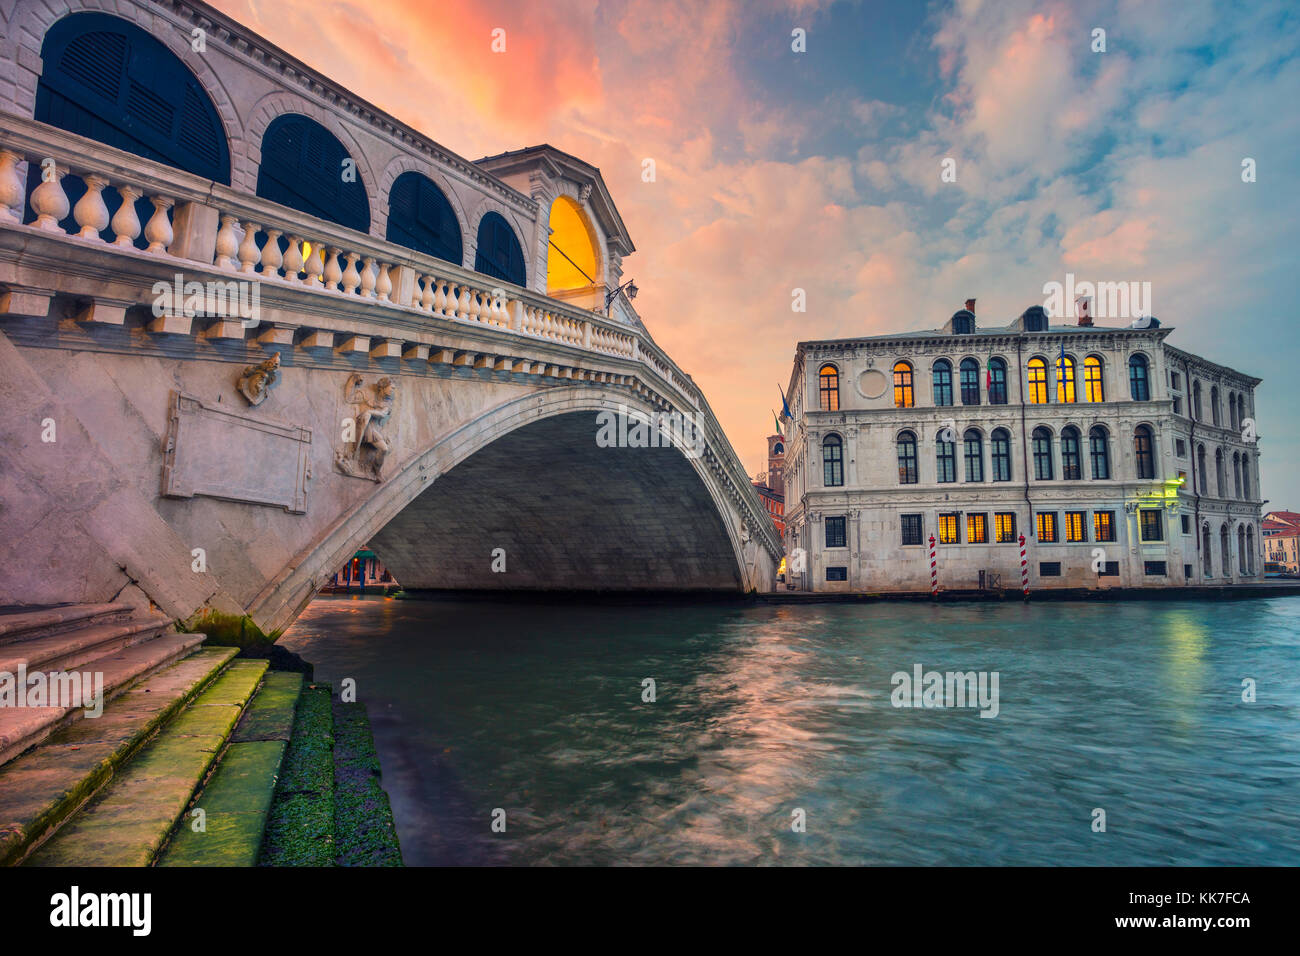 Venice. Cityscape image of Venice with famous Rialto Bridge and Grand Canal. Stock Photo